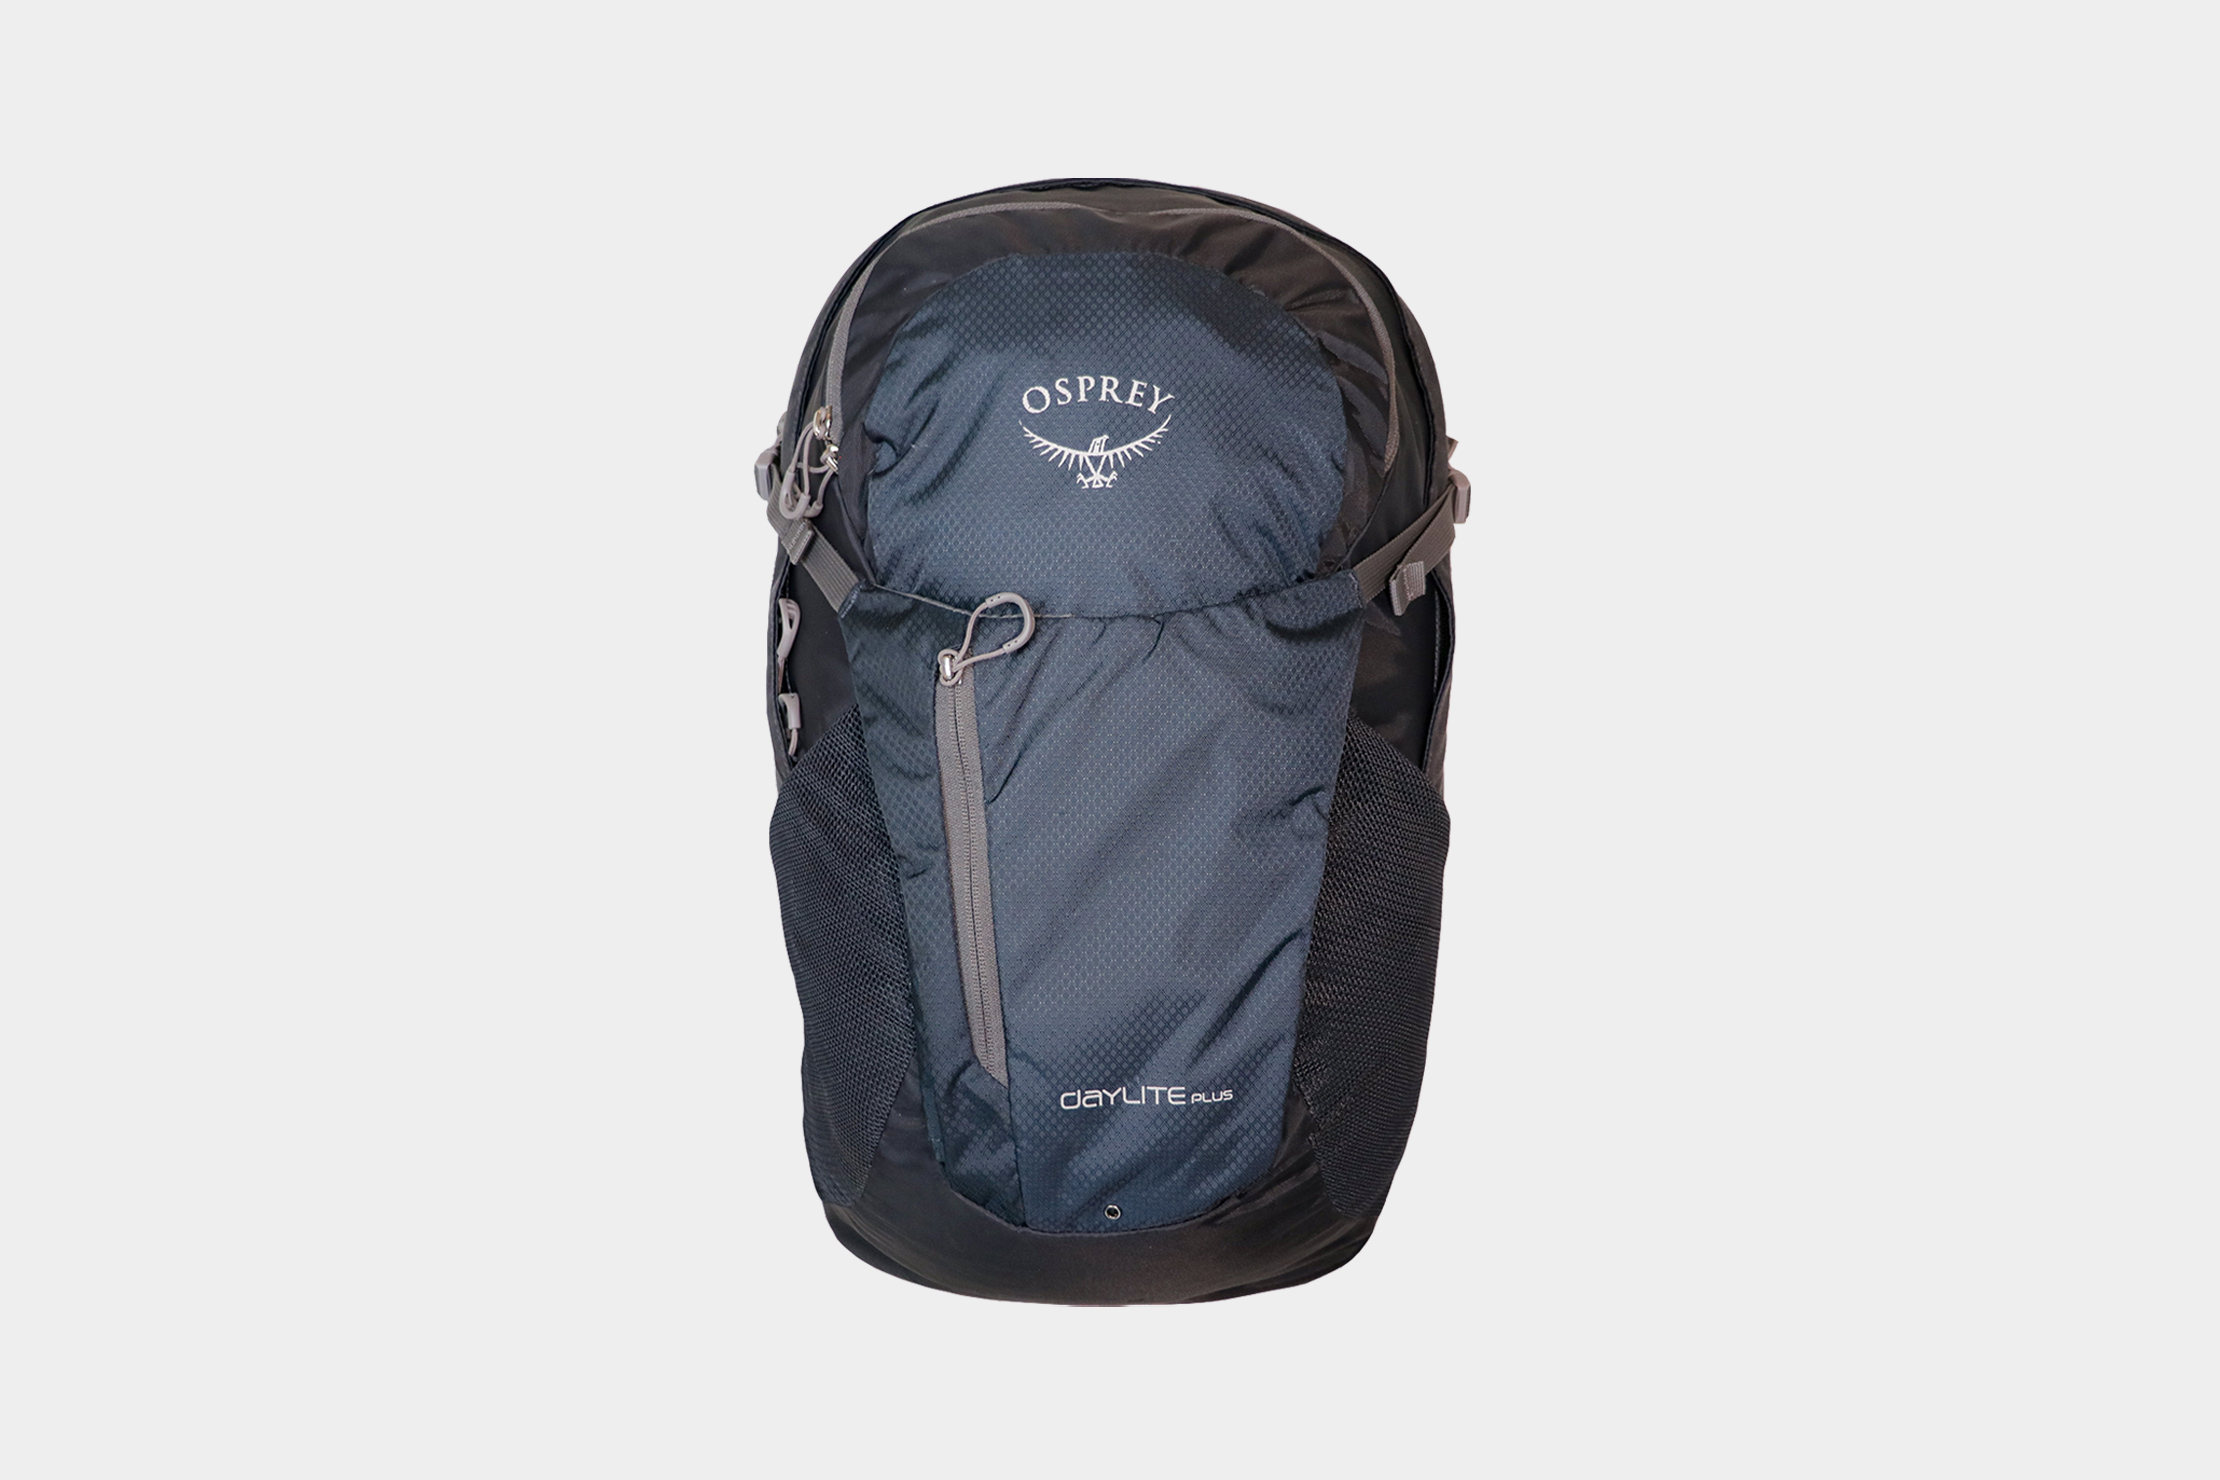 osprey daylite backpack